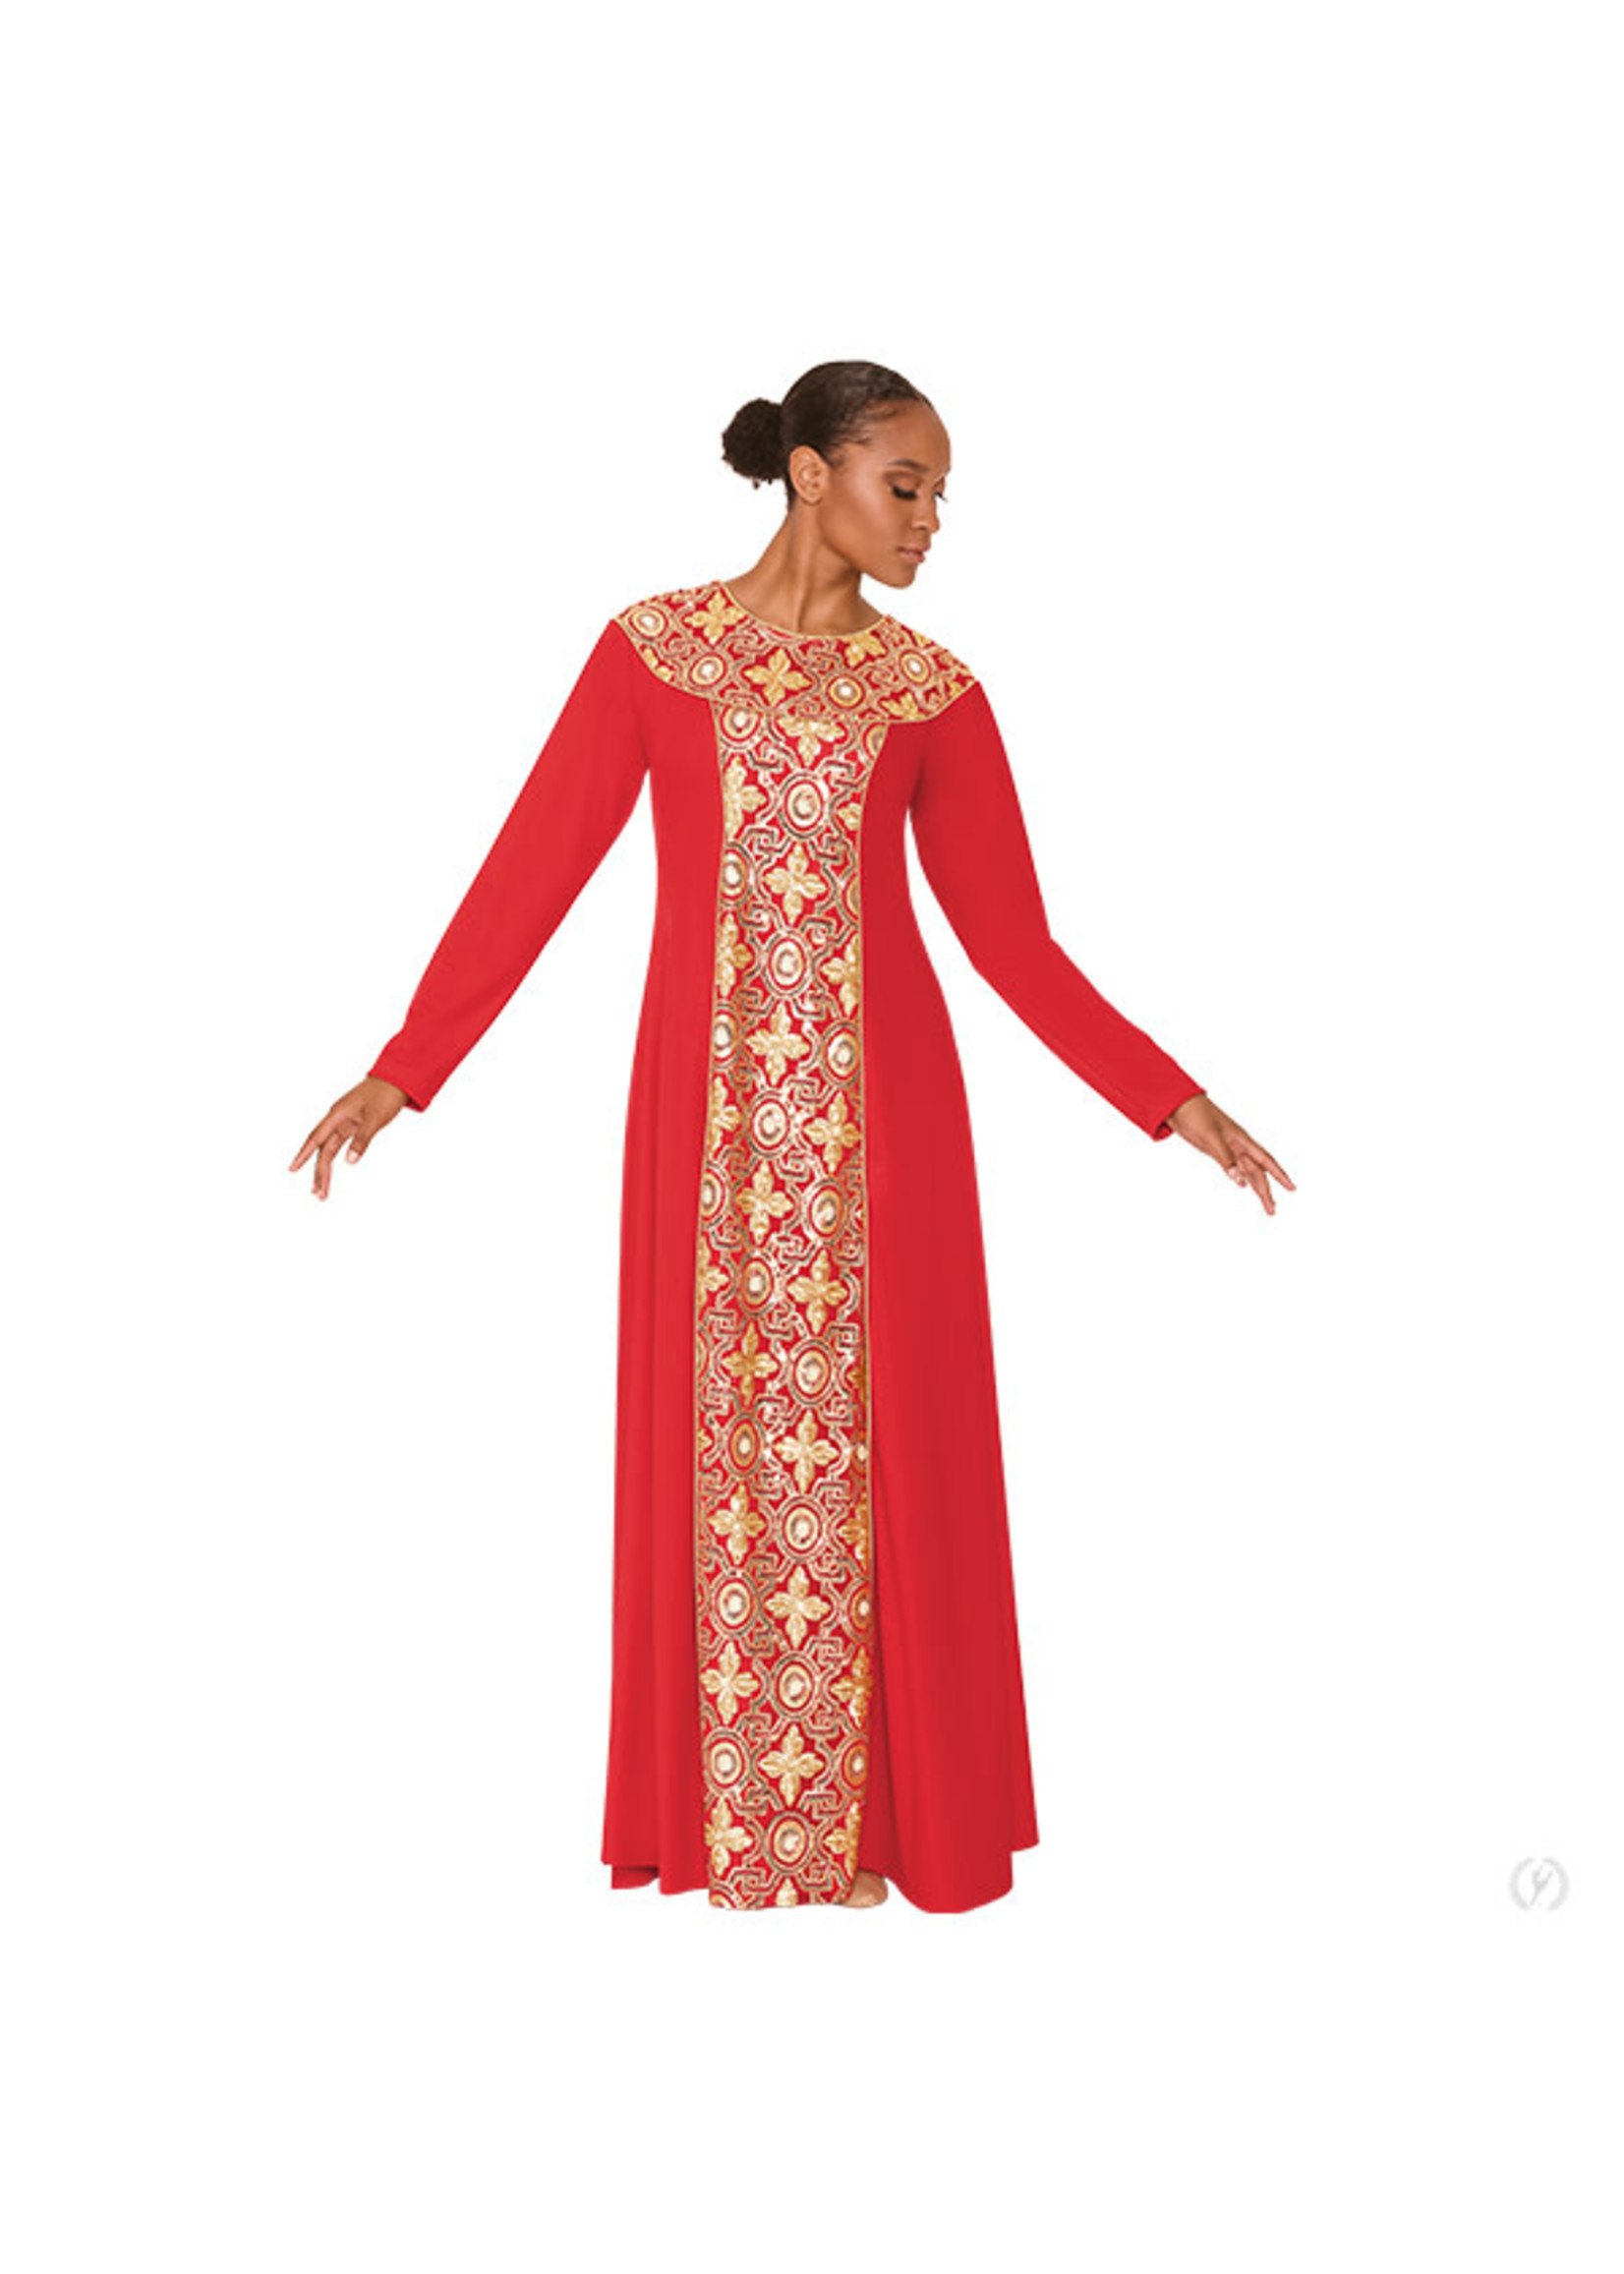 Tabernacle Long Sleeve Praise Dress